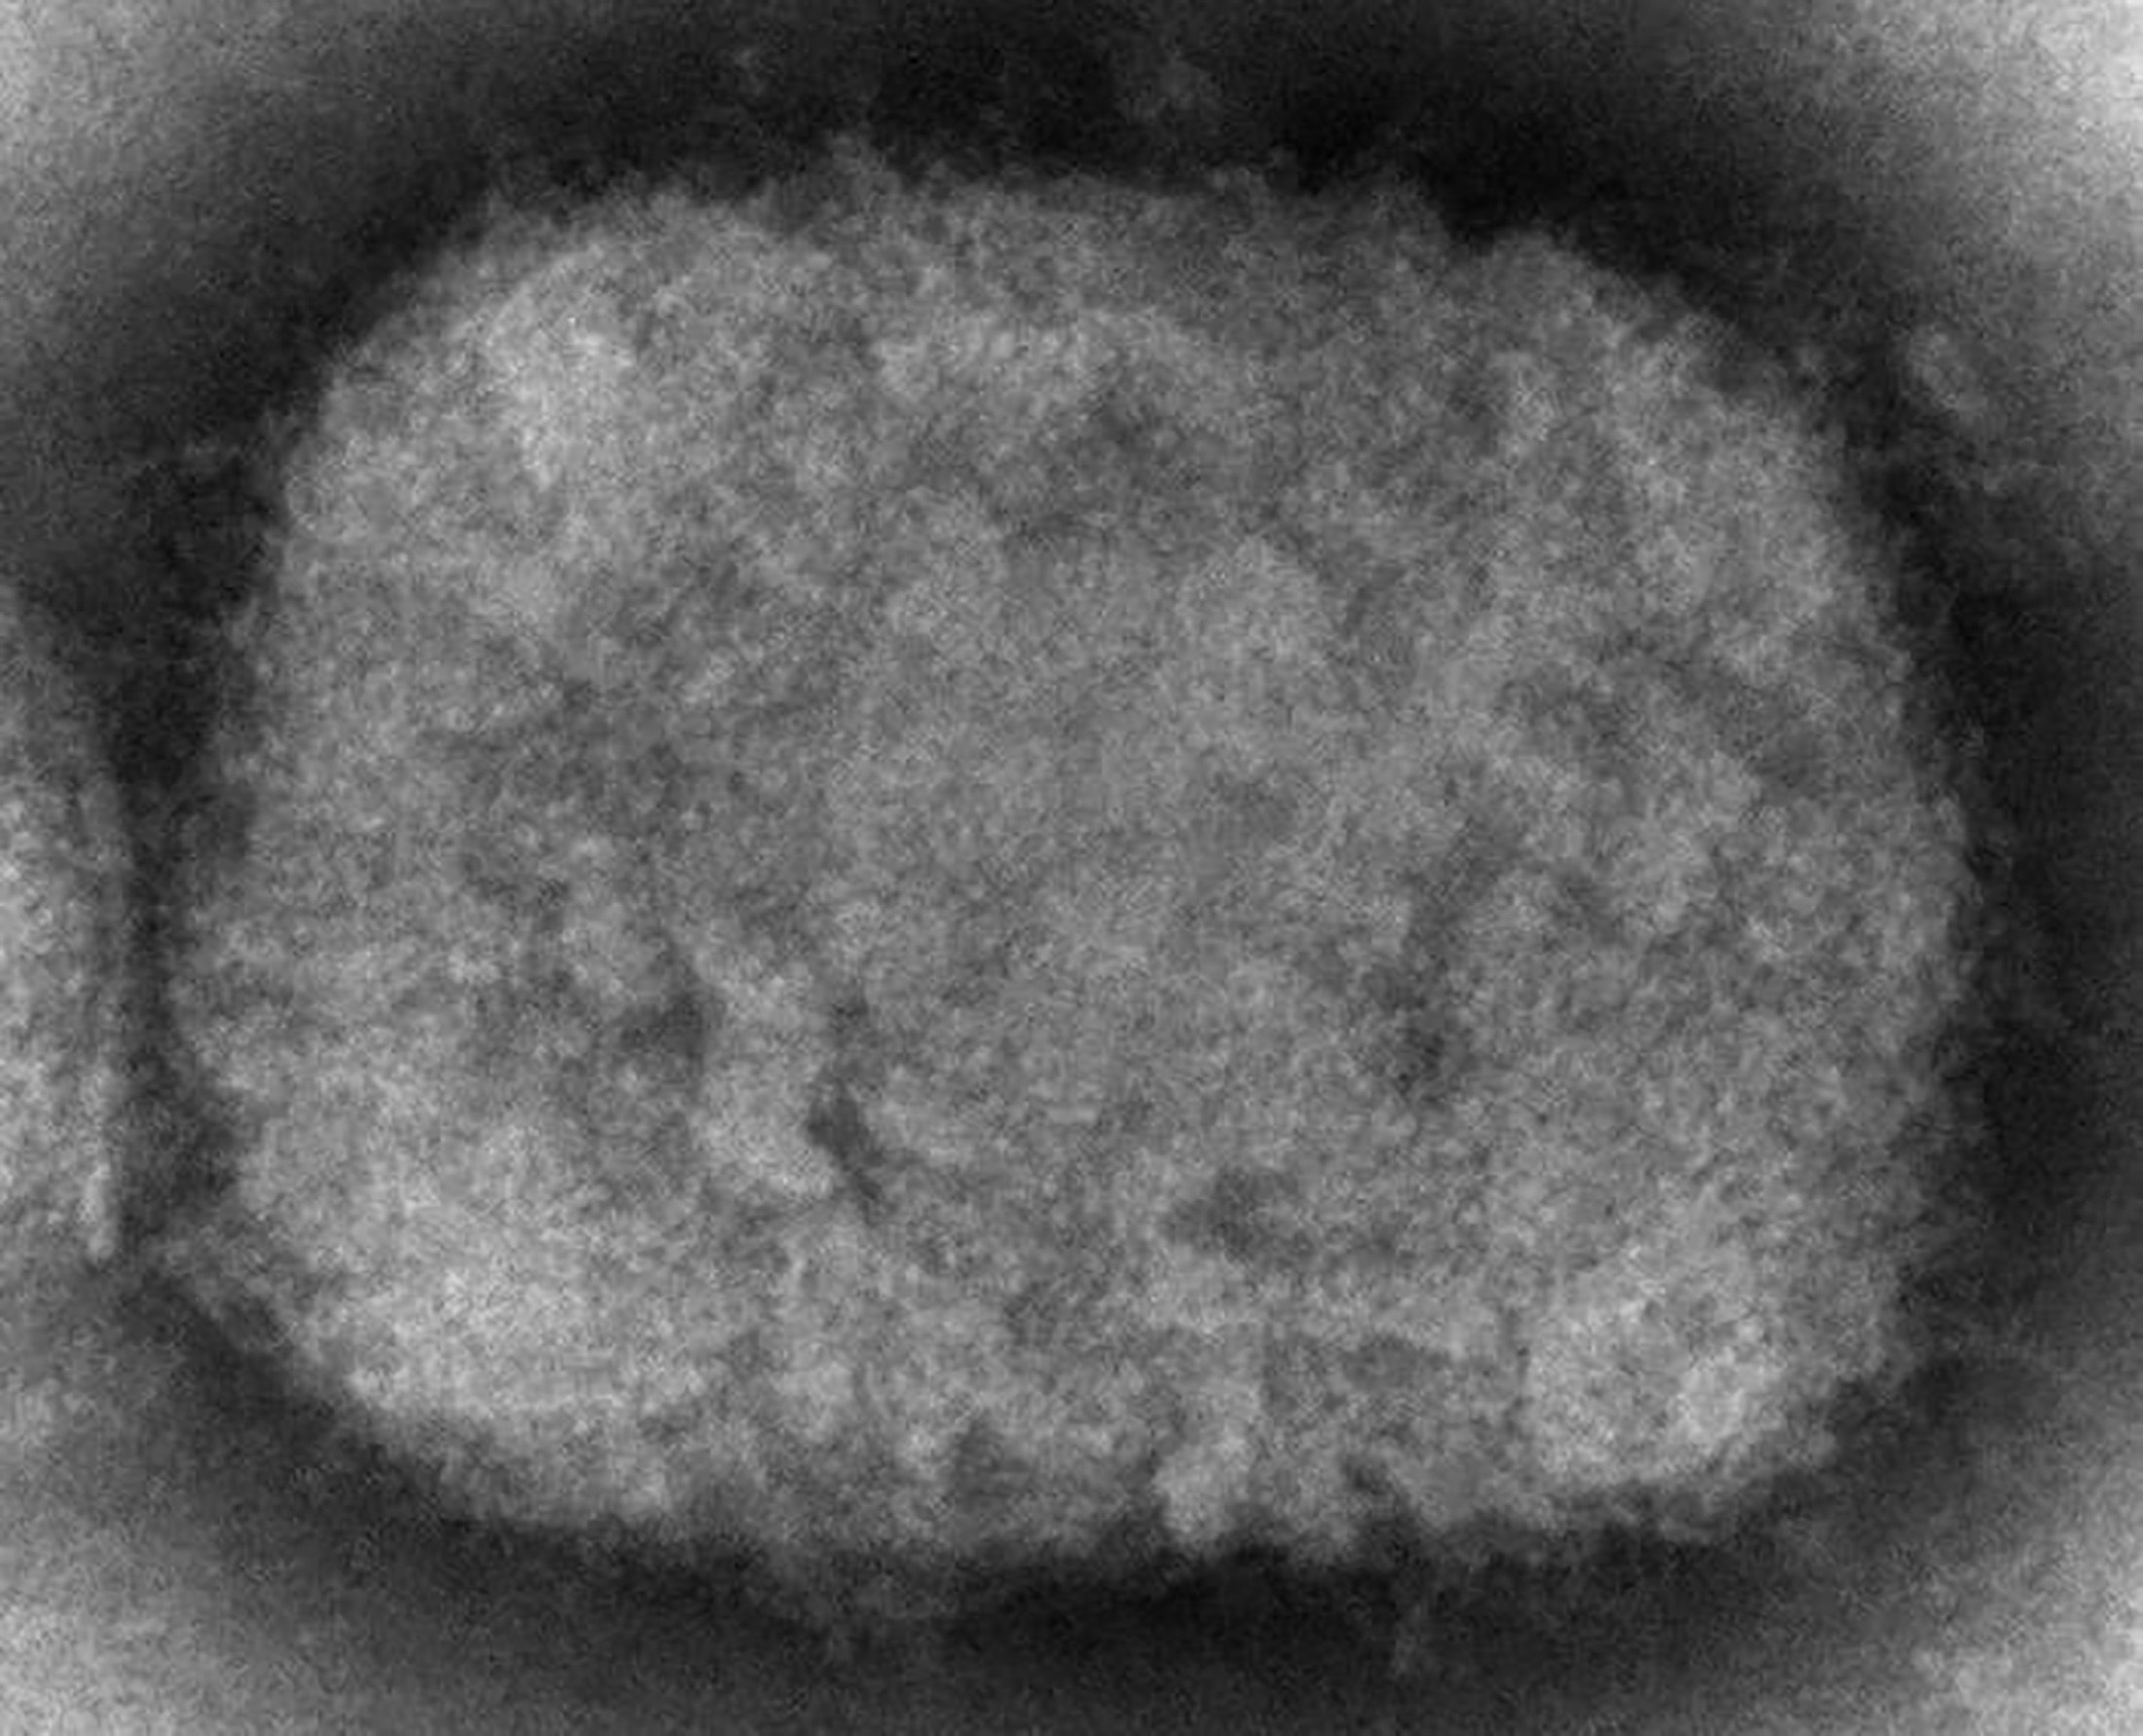 An electron microscope image showing&nbsp;a monkeypox virion.&nbsp;